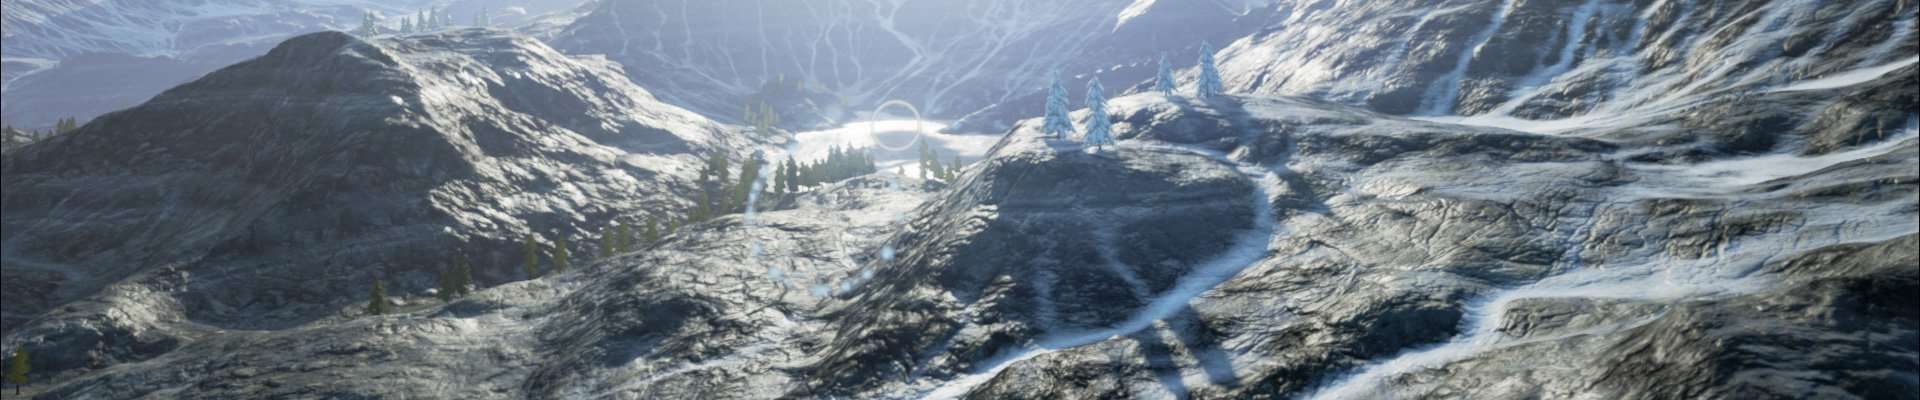 A mountainous landscape designed using Unreal Engine